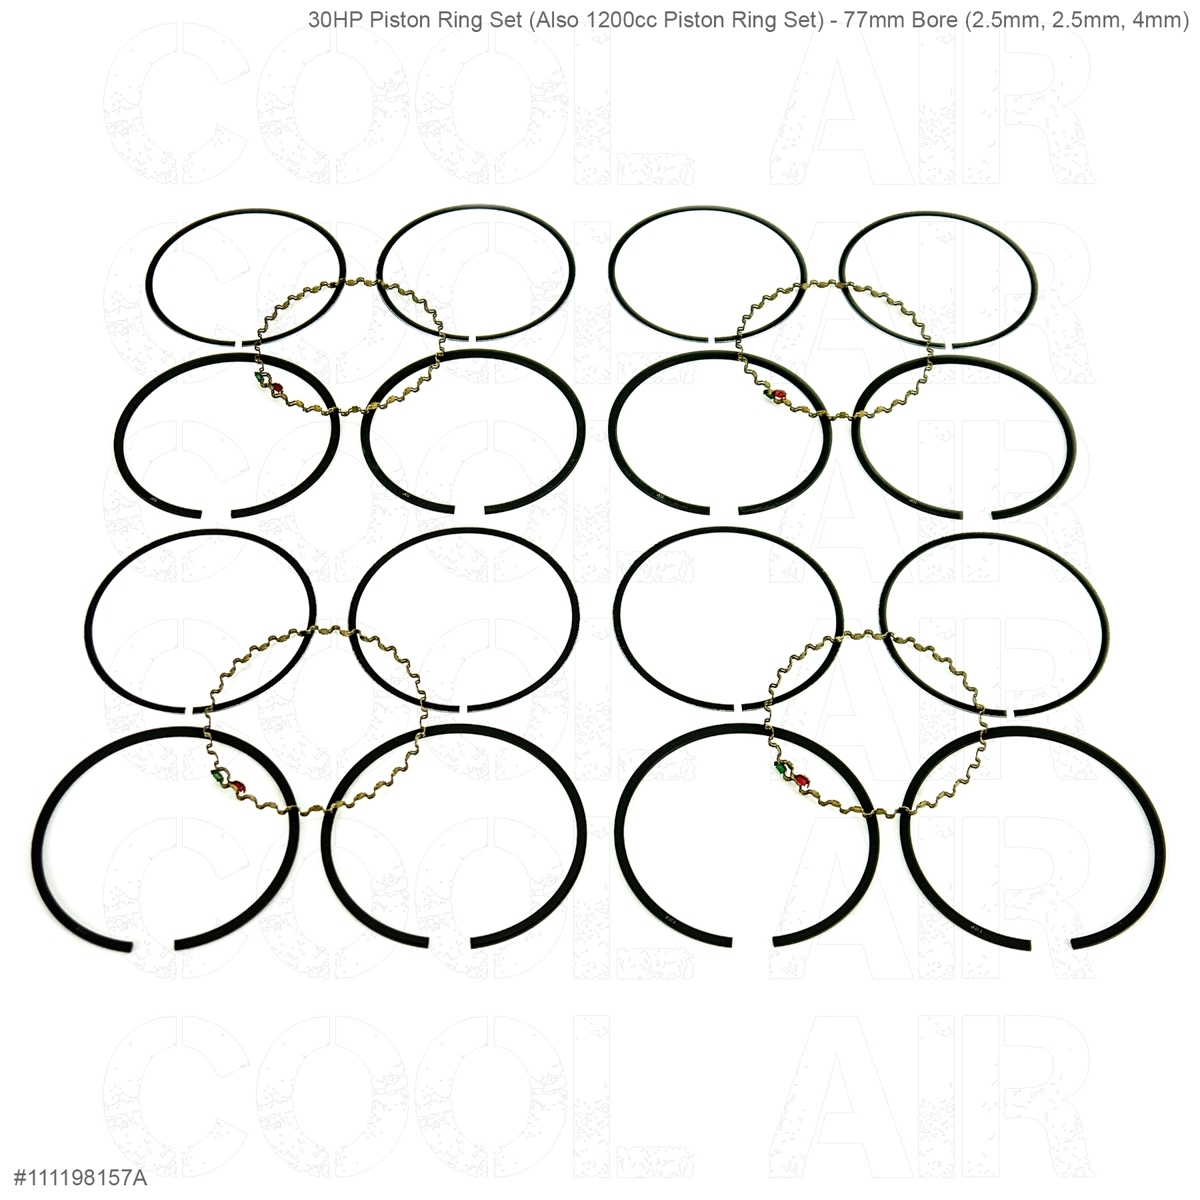 30HP+1200cc Piston Ring Set - 77mm Bore (2.5mm, 2.5mm, 4mm)